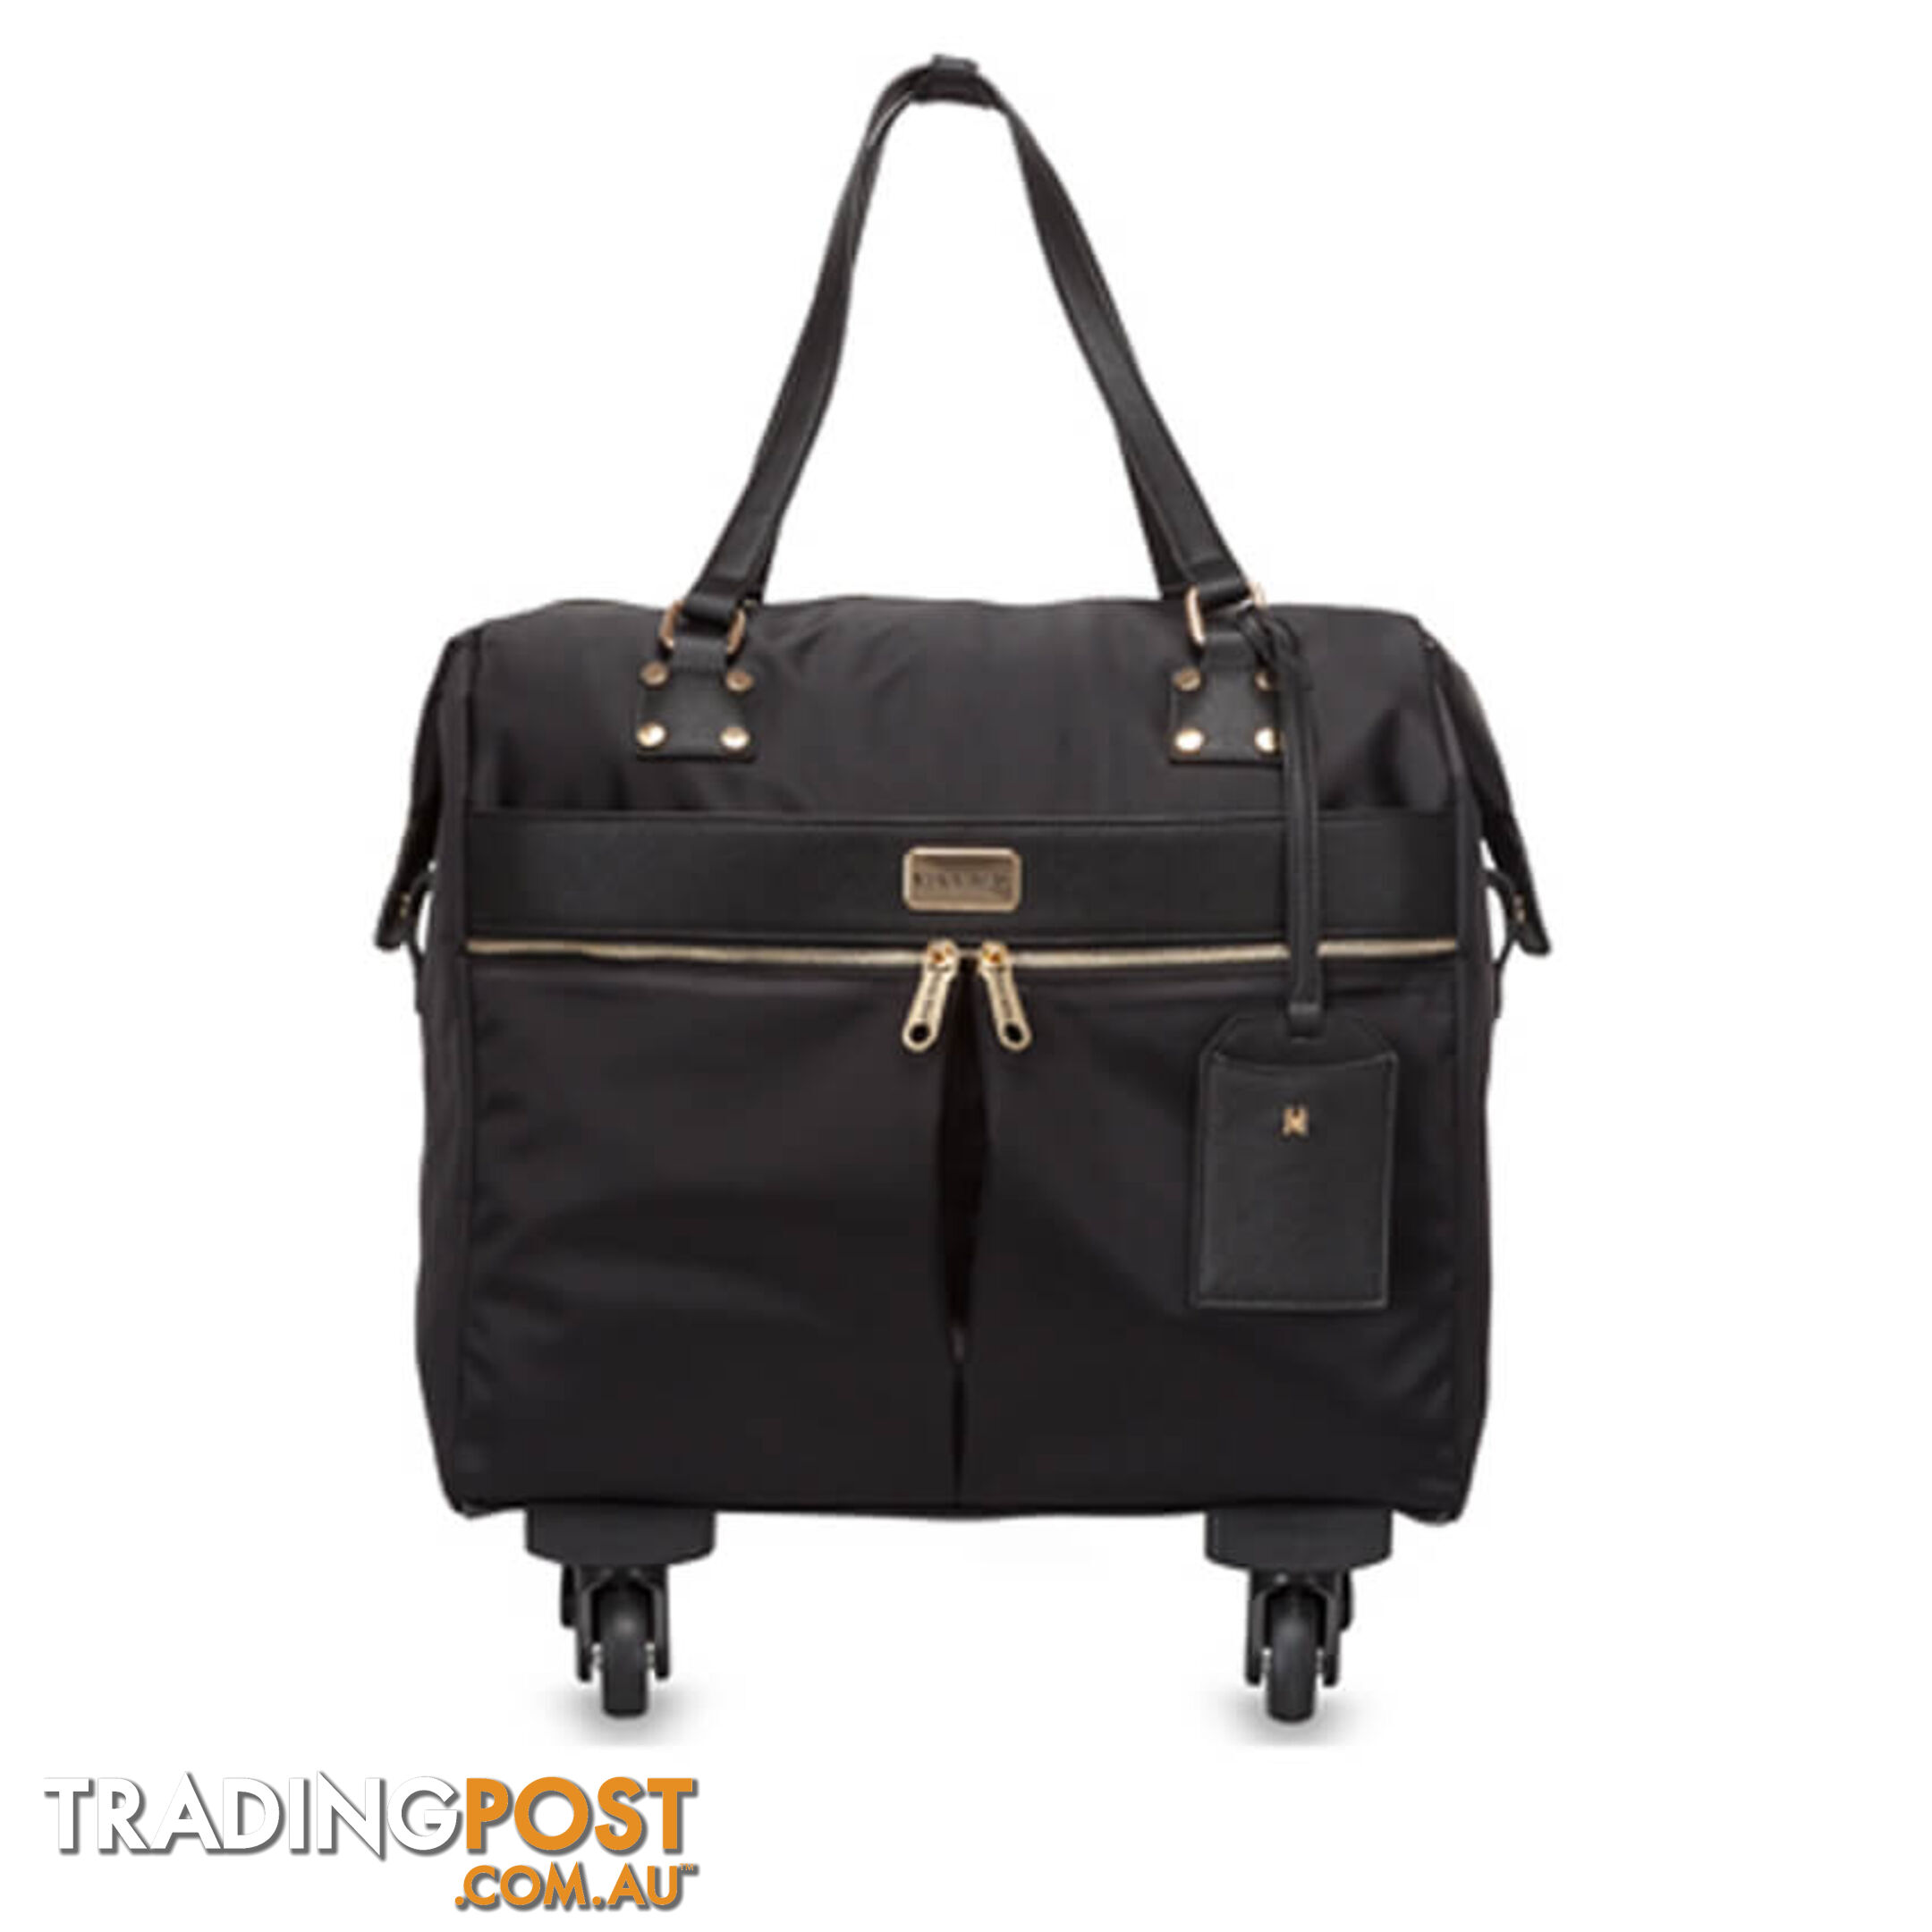 ARUBA Black Travel Bag